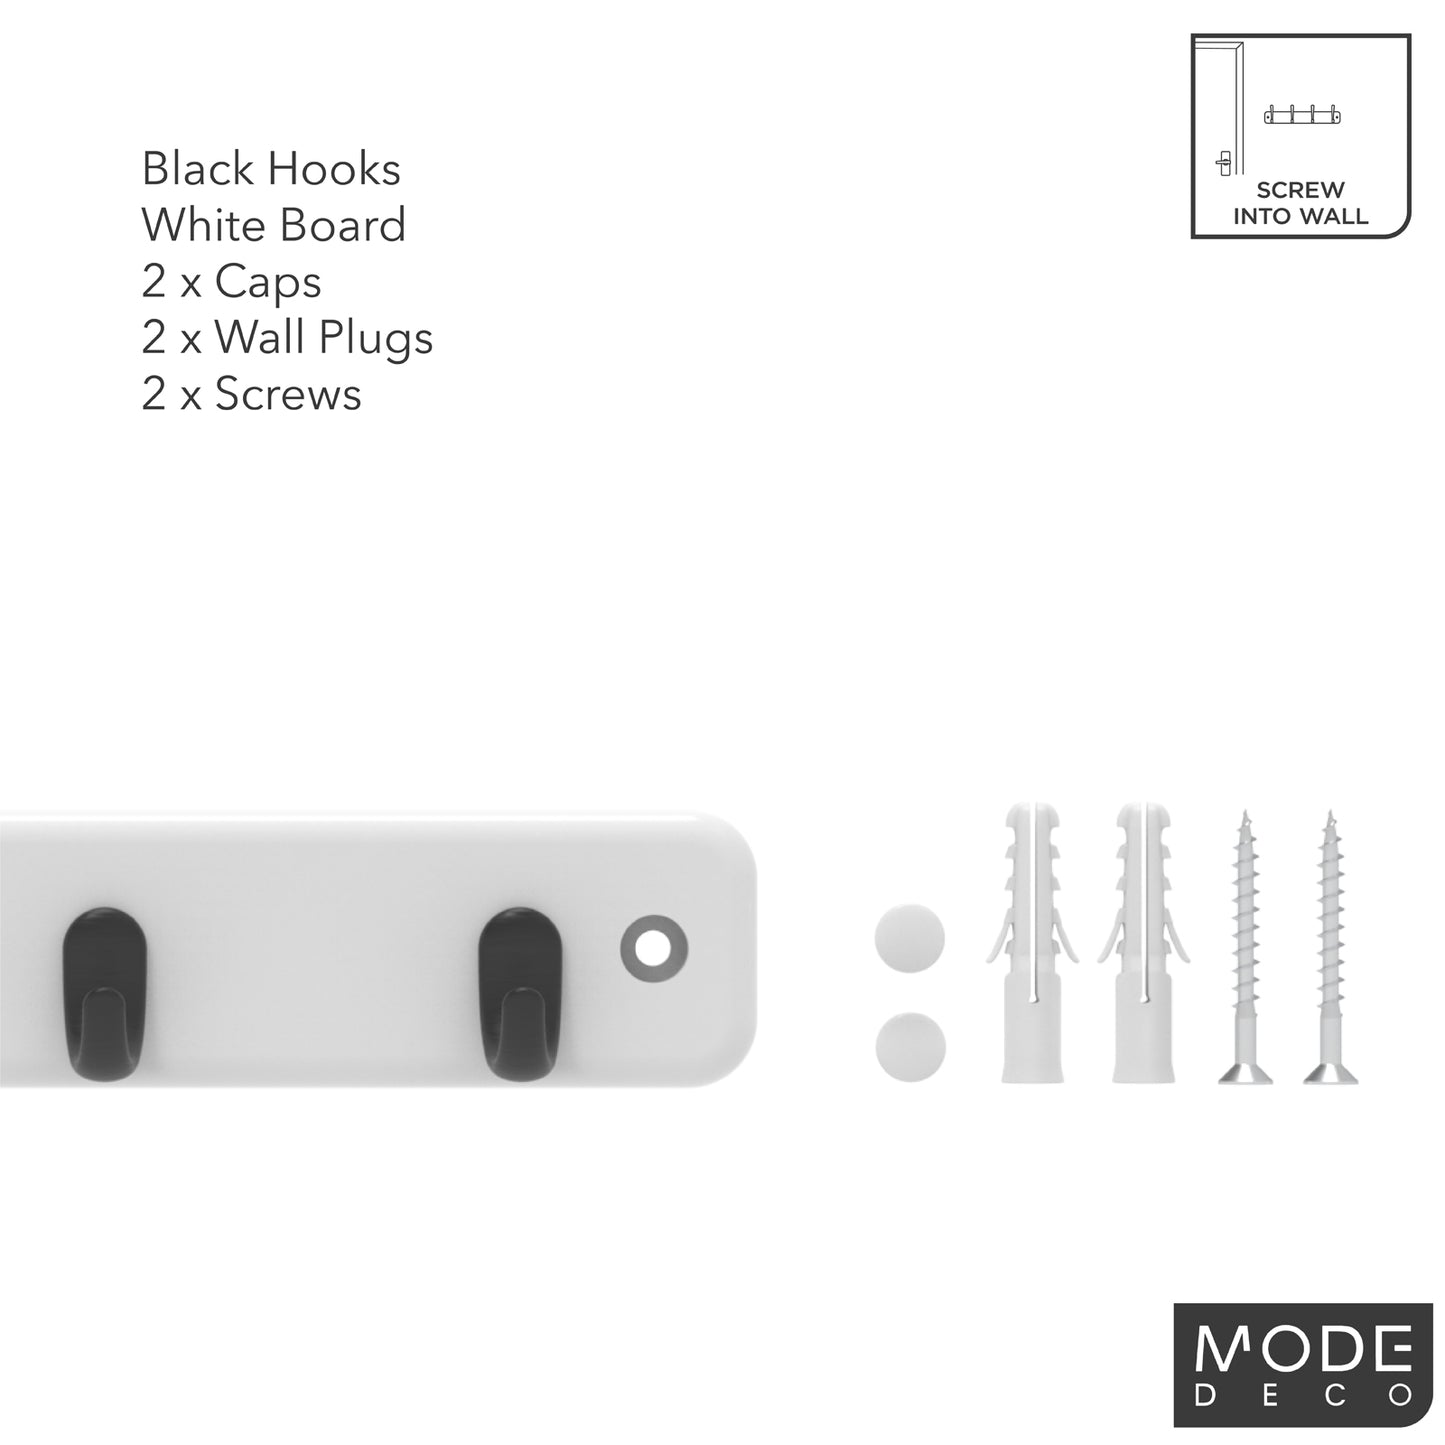 4 Black Hooks on White Board Key Rack